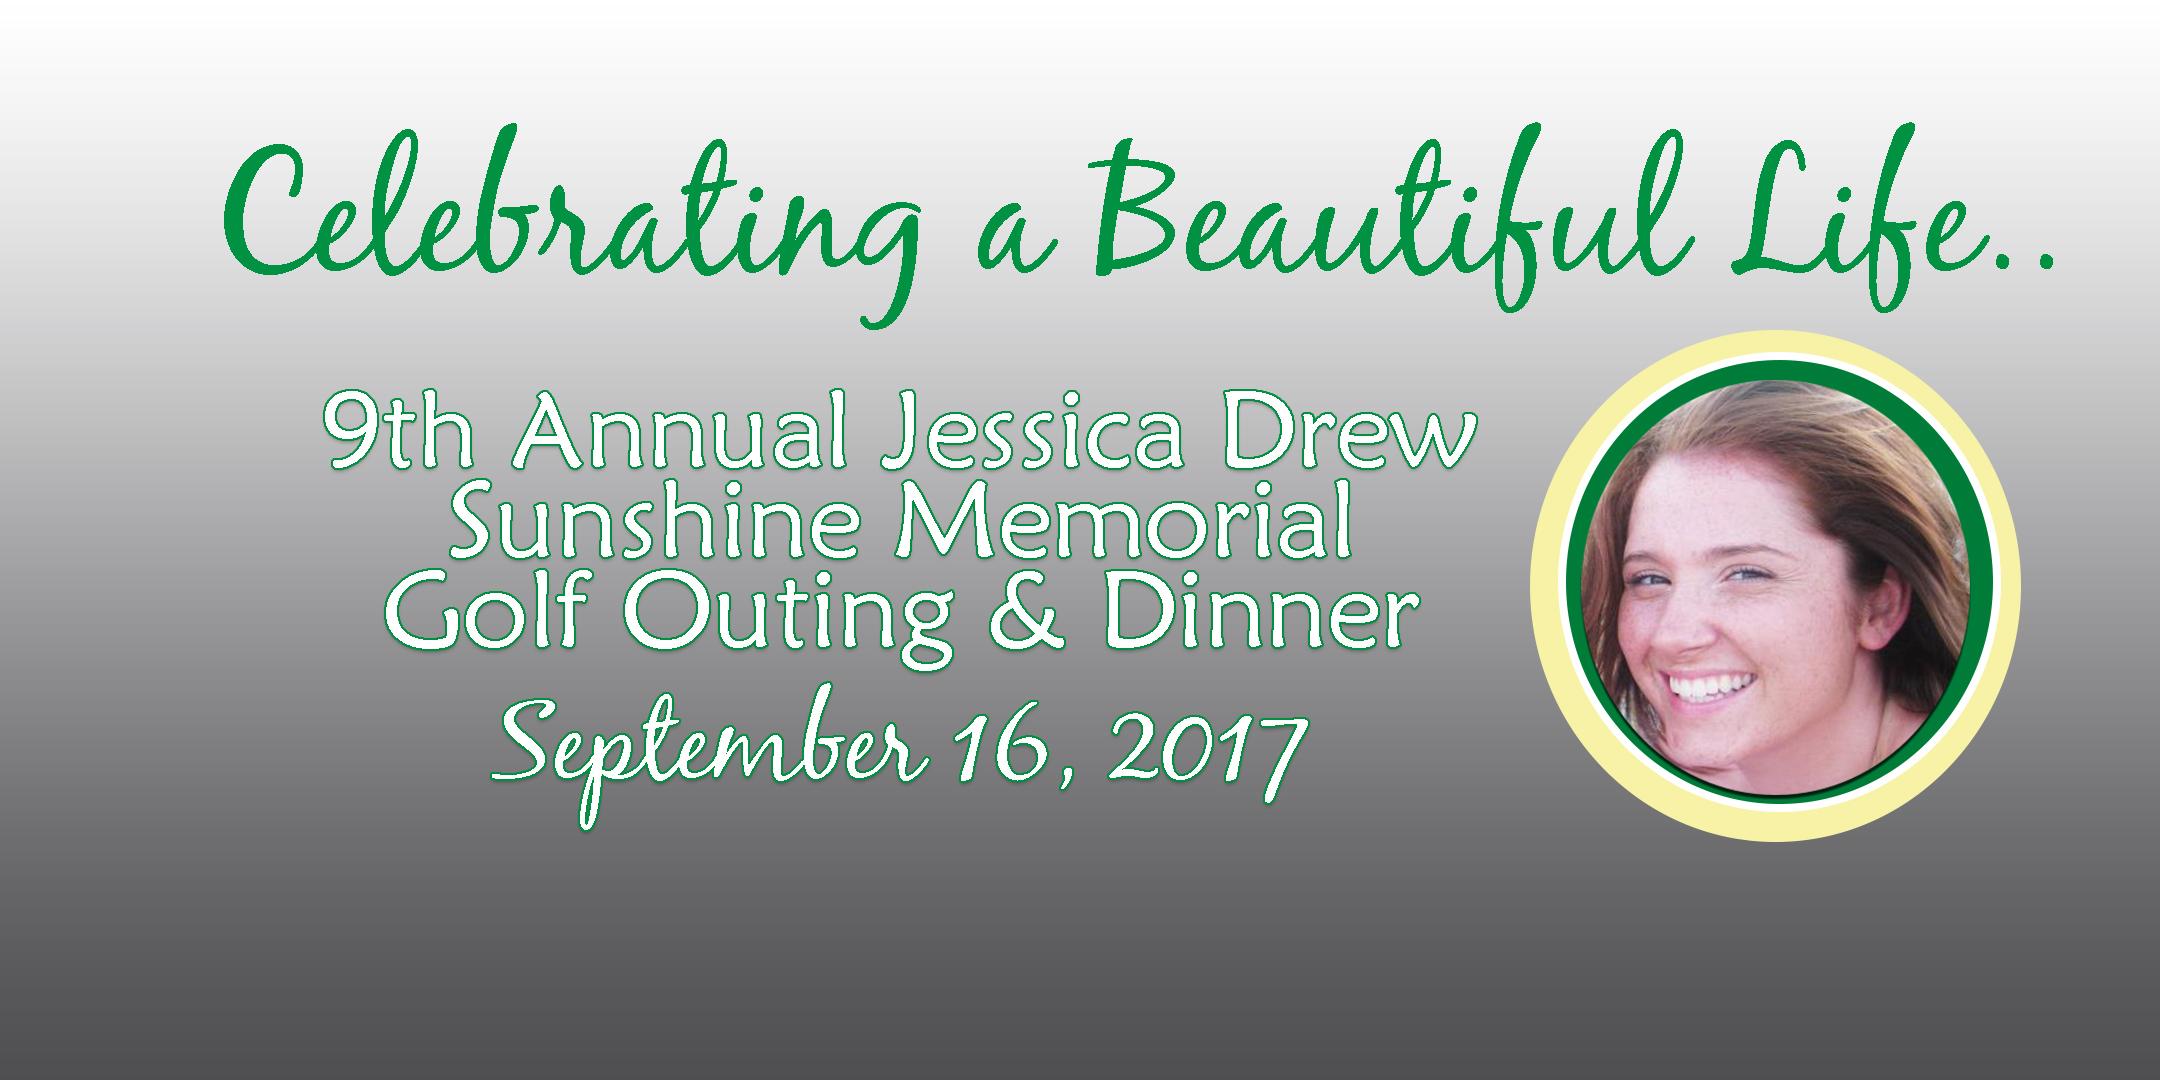 The 2017 Jessica Drew Sunshine Memorial Golf Outing & Reception